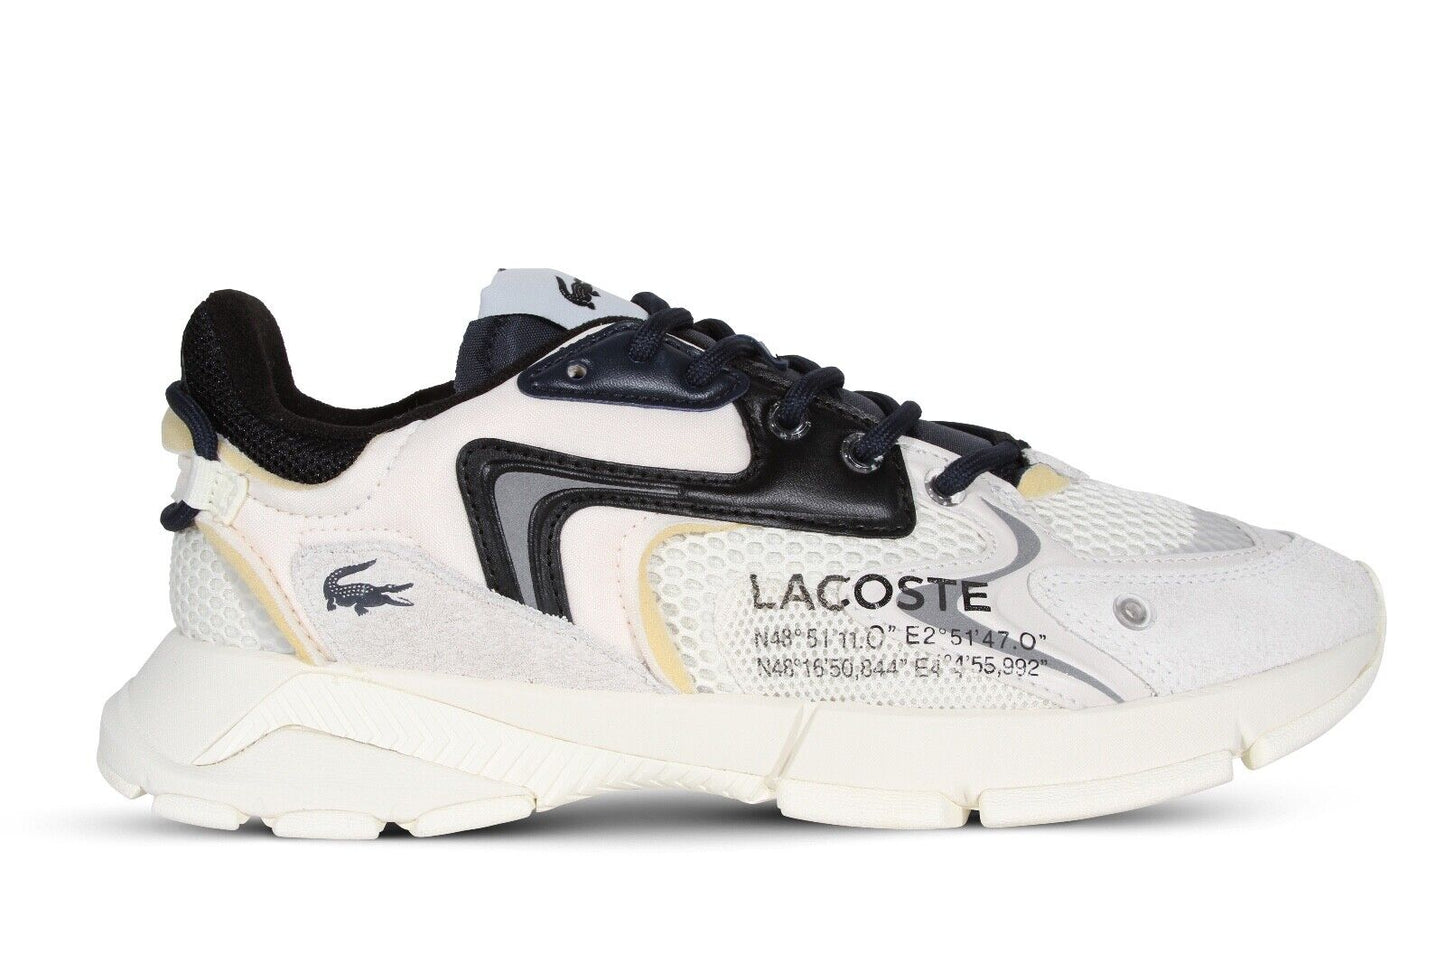 Lacoste L003 Neo 123 1 SMA Men's Sneakers in Off White and Black 745SMA00012G9